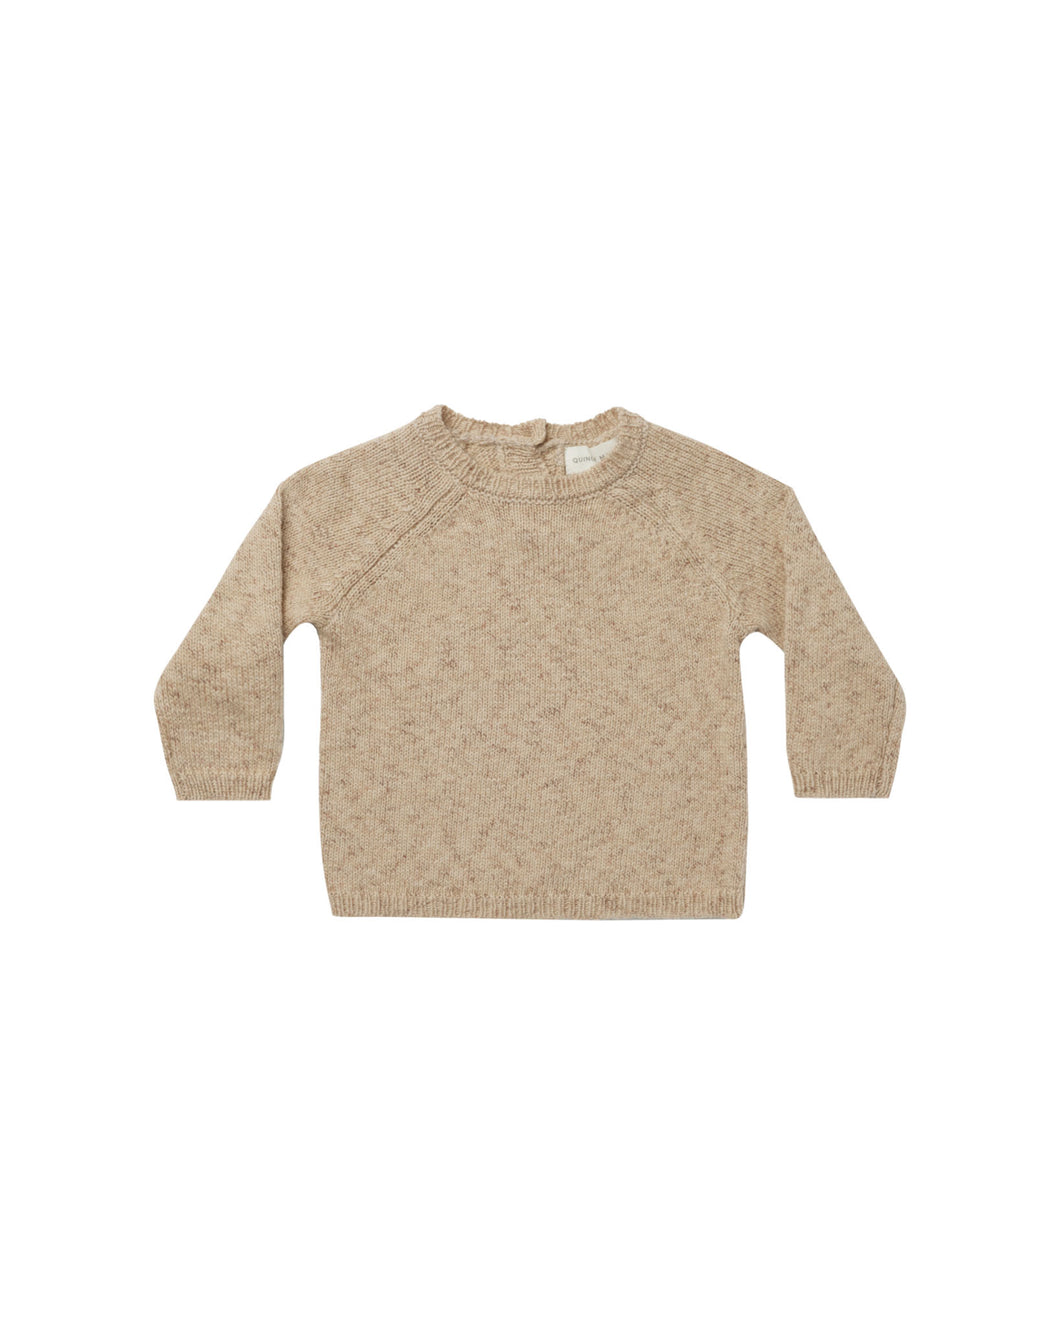 Latte Speckled Knit Sweater